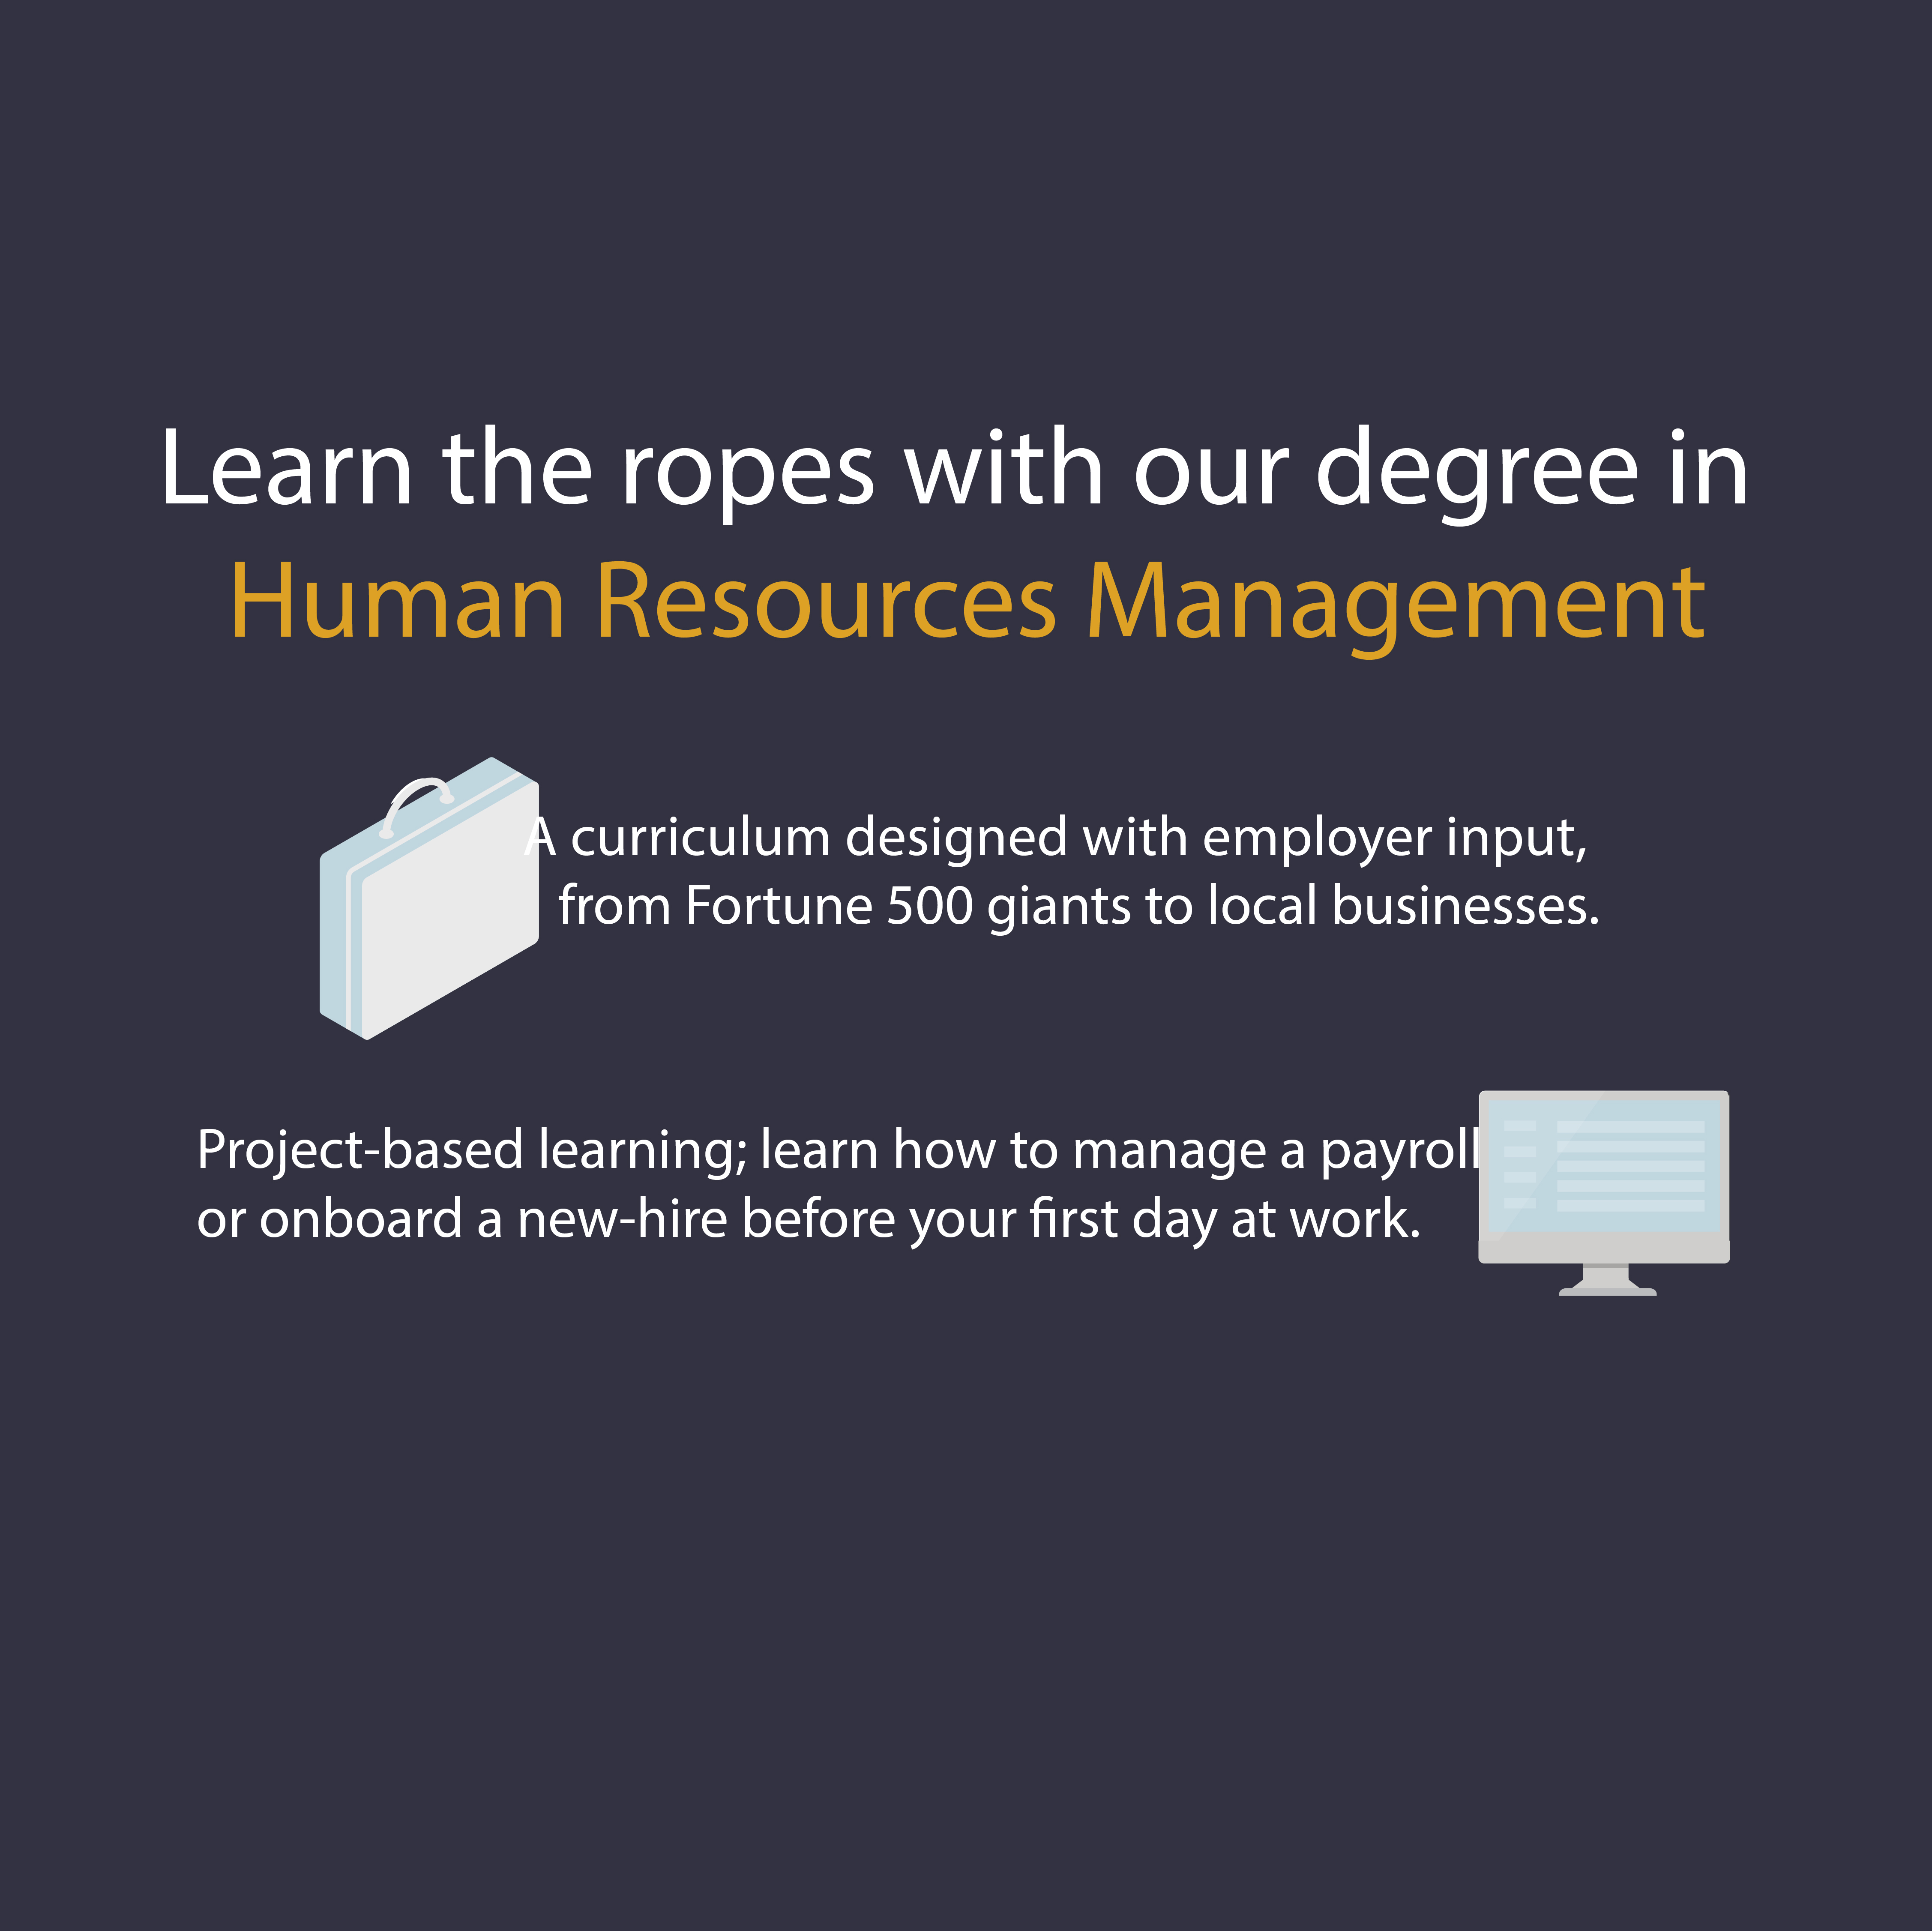 Infographic describing the benefits of Human Resource Management